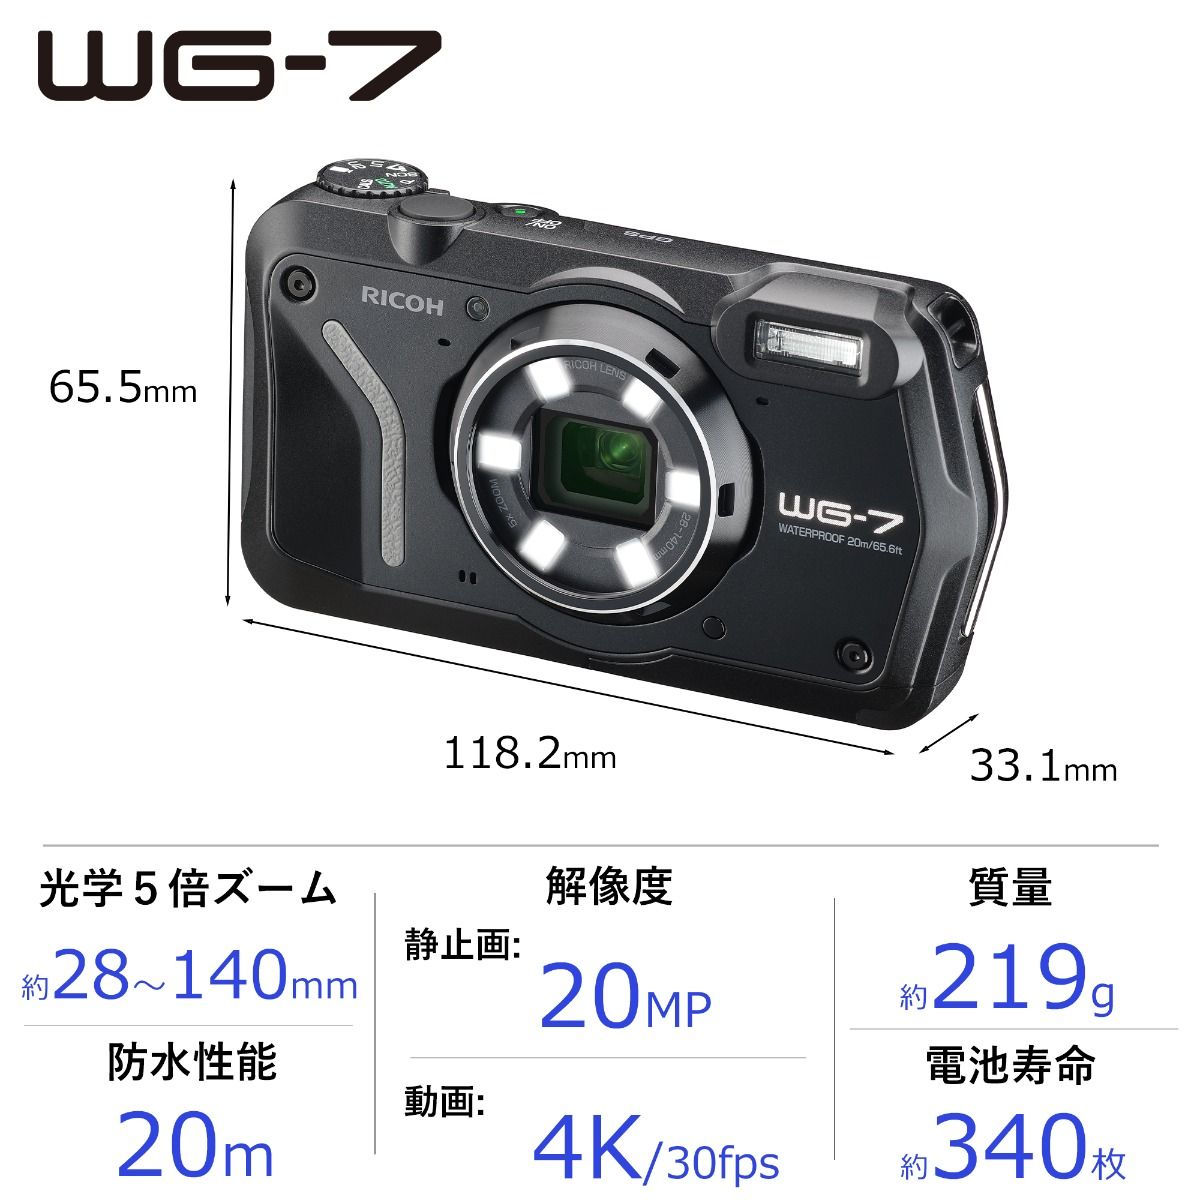 Ricoh WG-7 waterproof camera announced (in Japan only?) - Pentax 